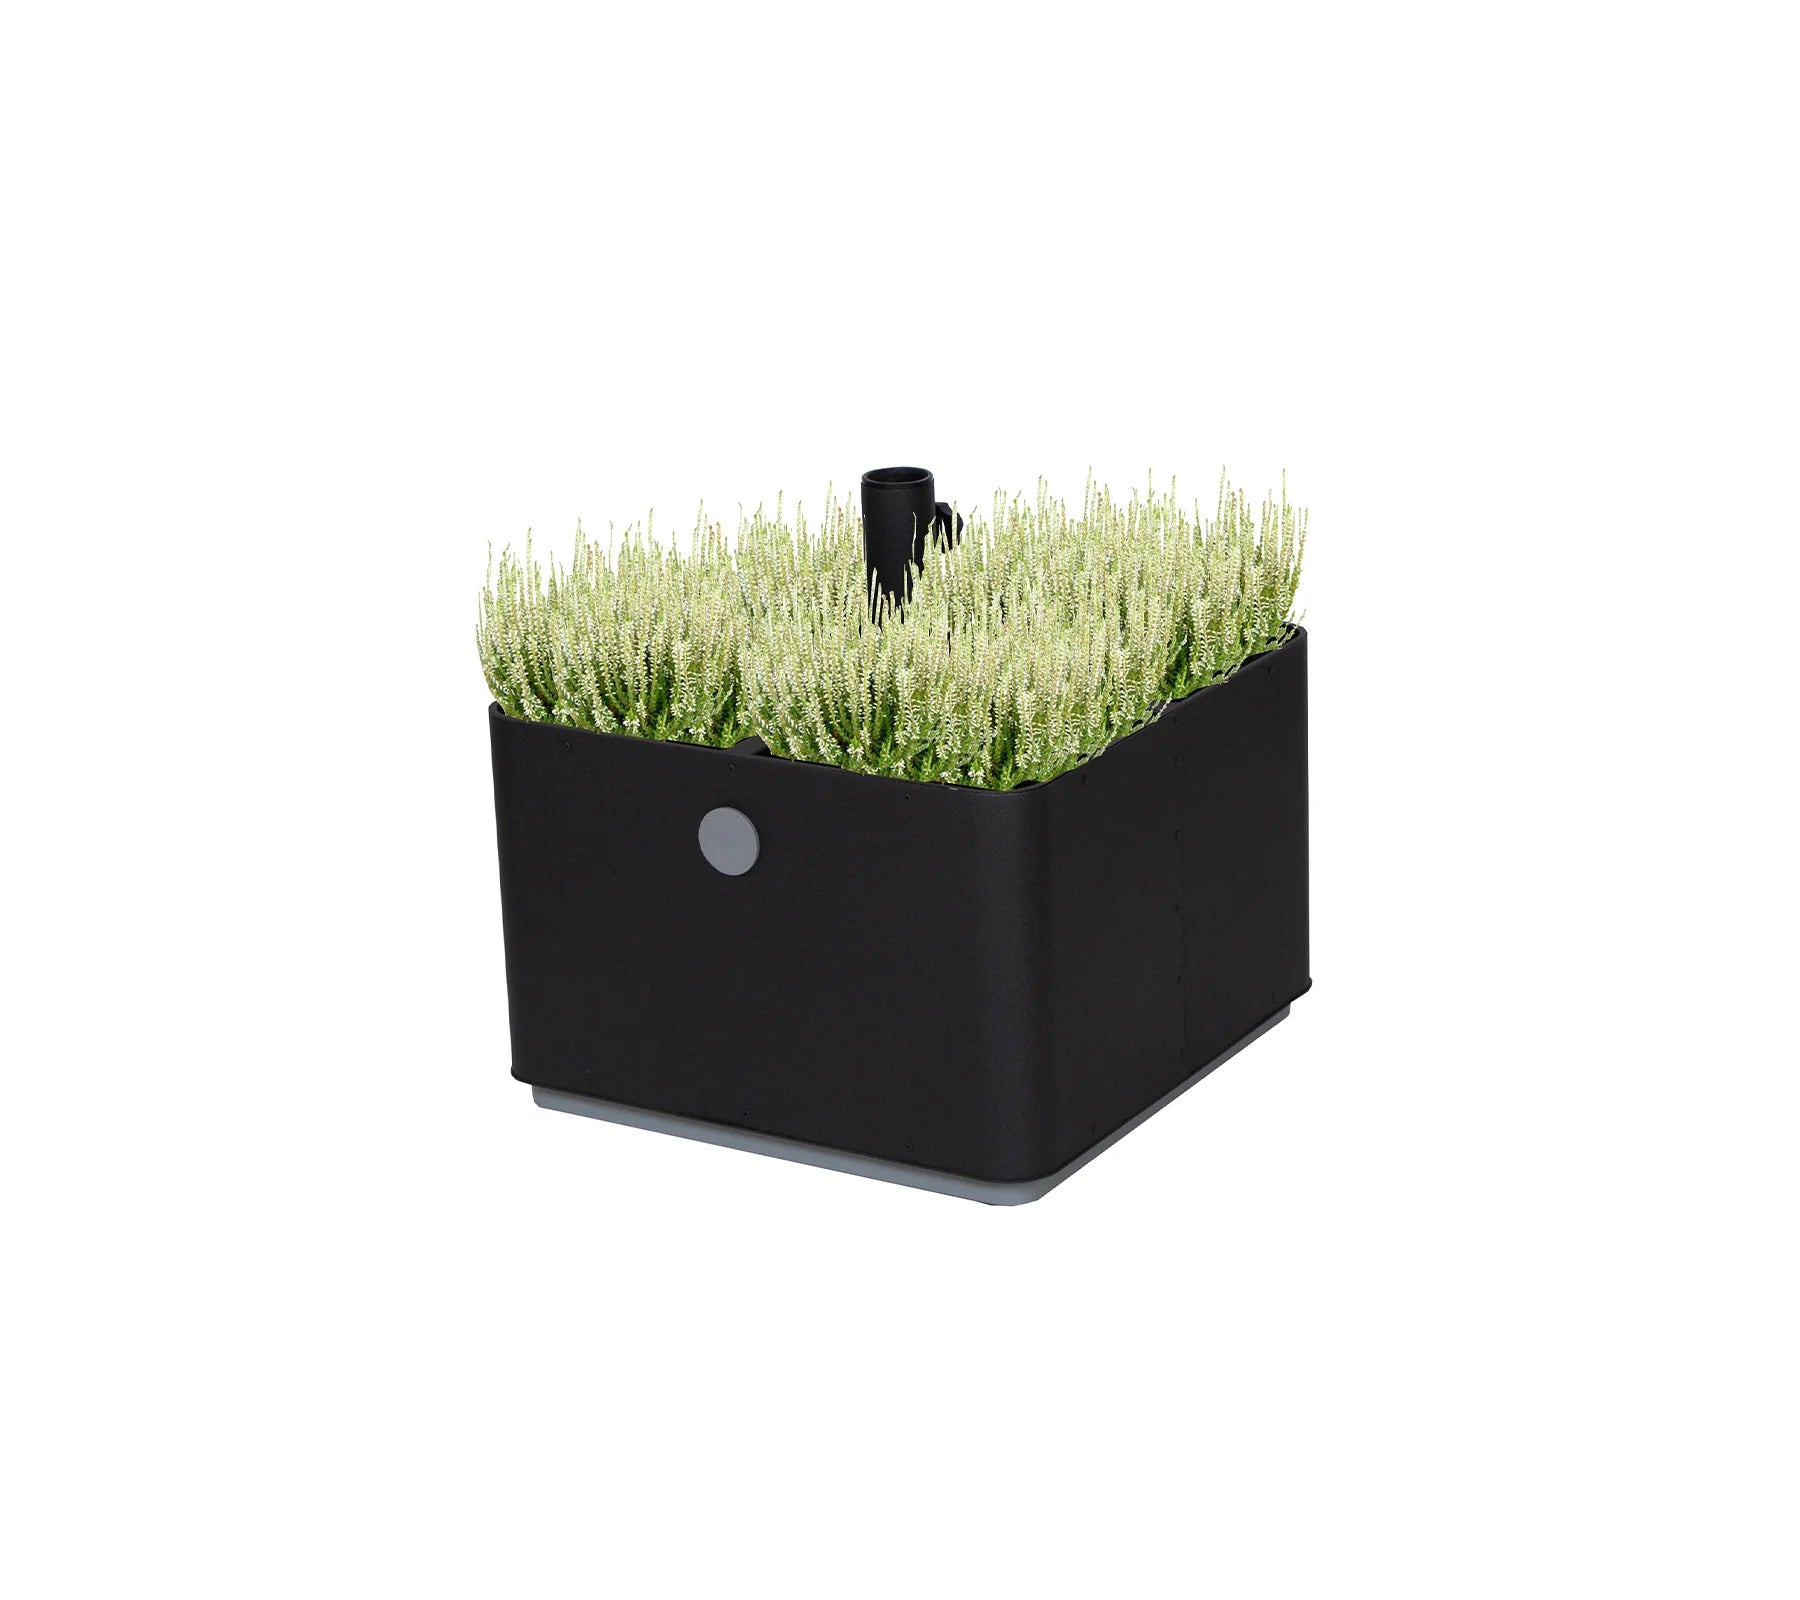 Grow Umbrella Base and Planter Box with Wheels